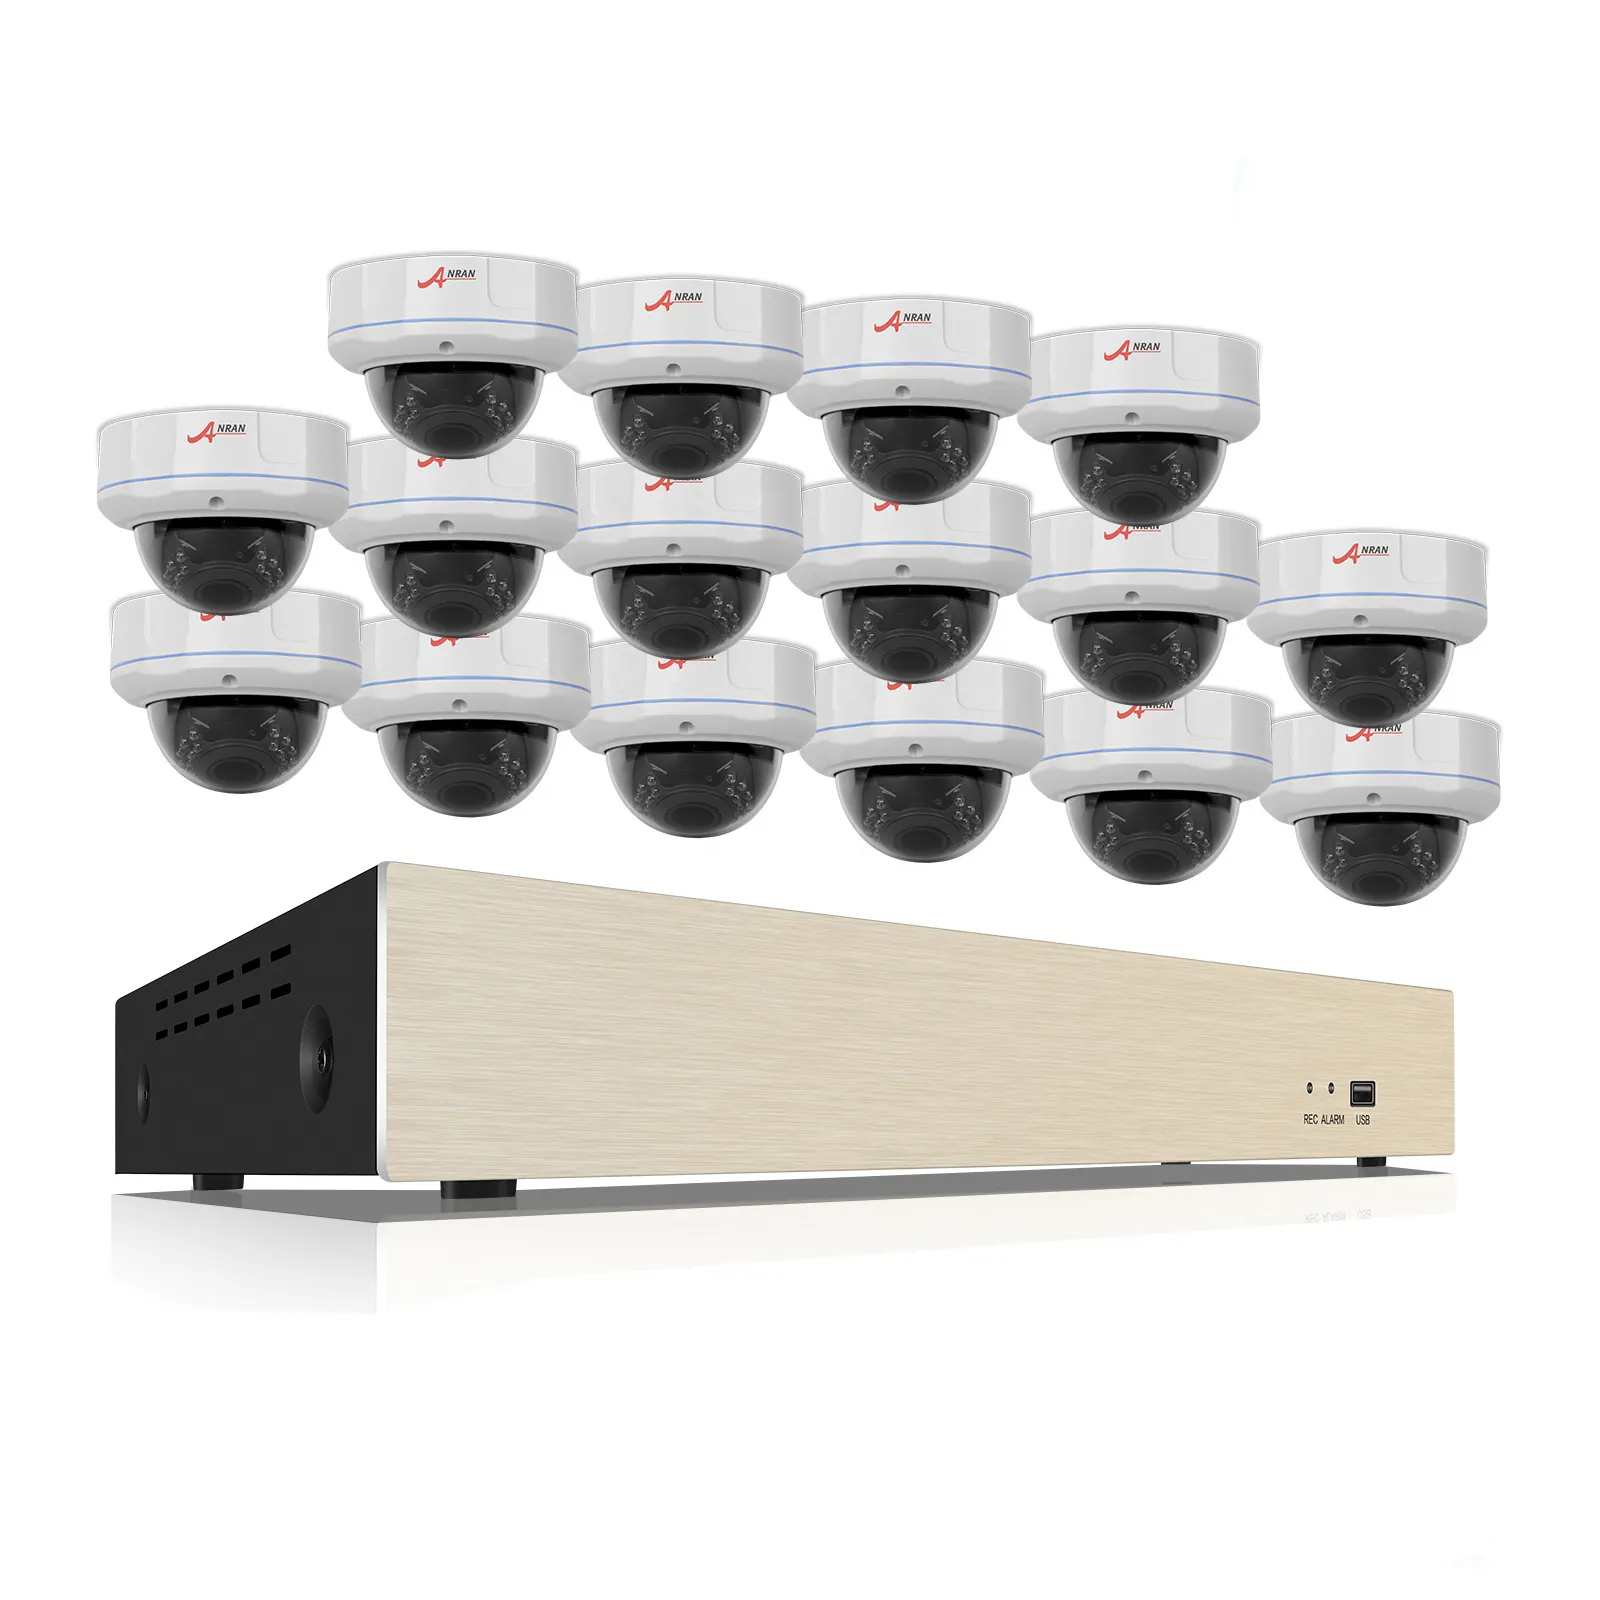 Anran hot sale 5MP CCTV IP Cameras Kits 16 Channel 48v poe nvr Home Video Surveillance Cameras Security System